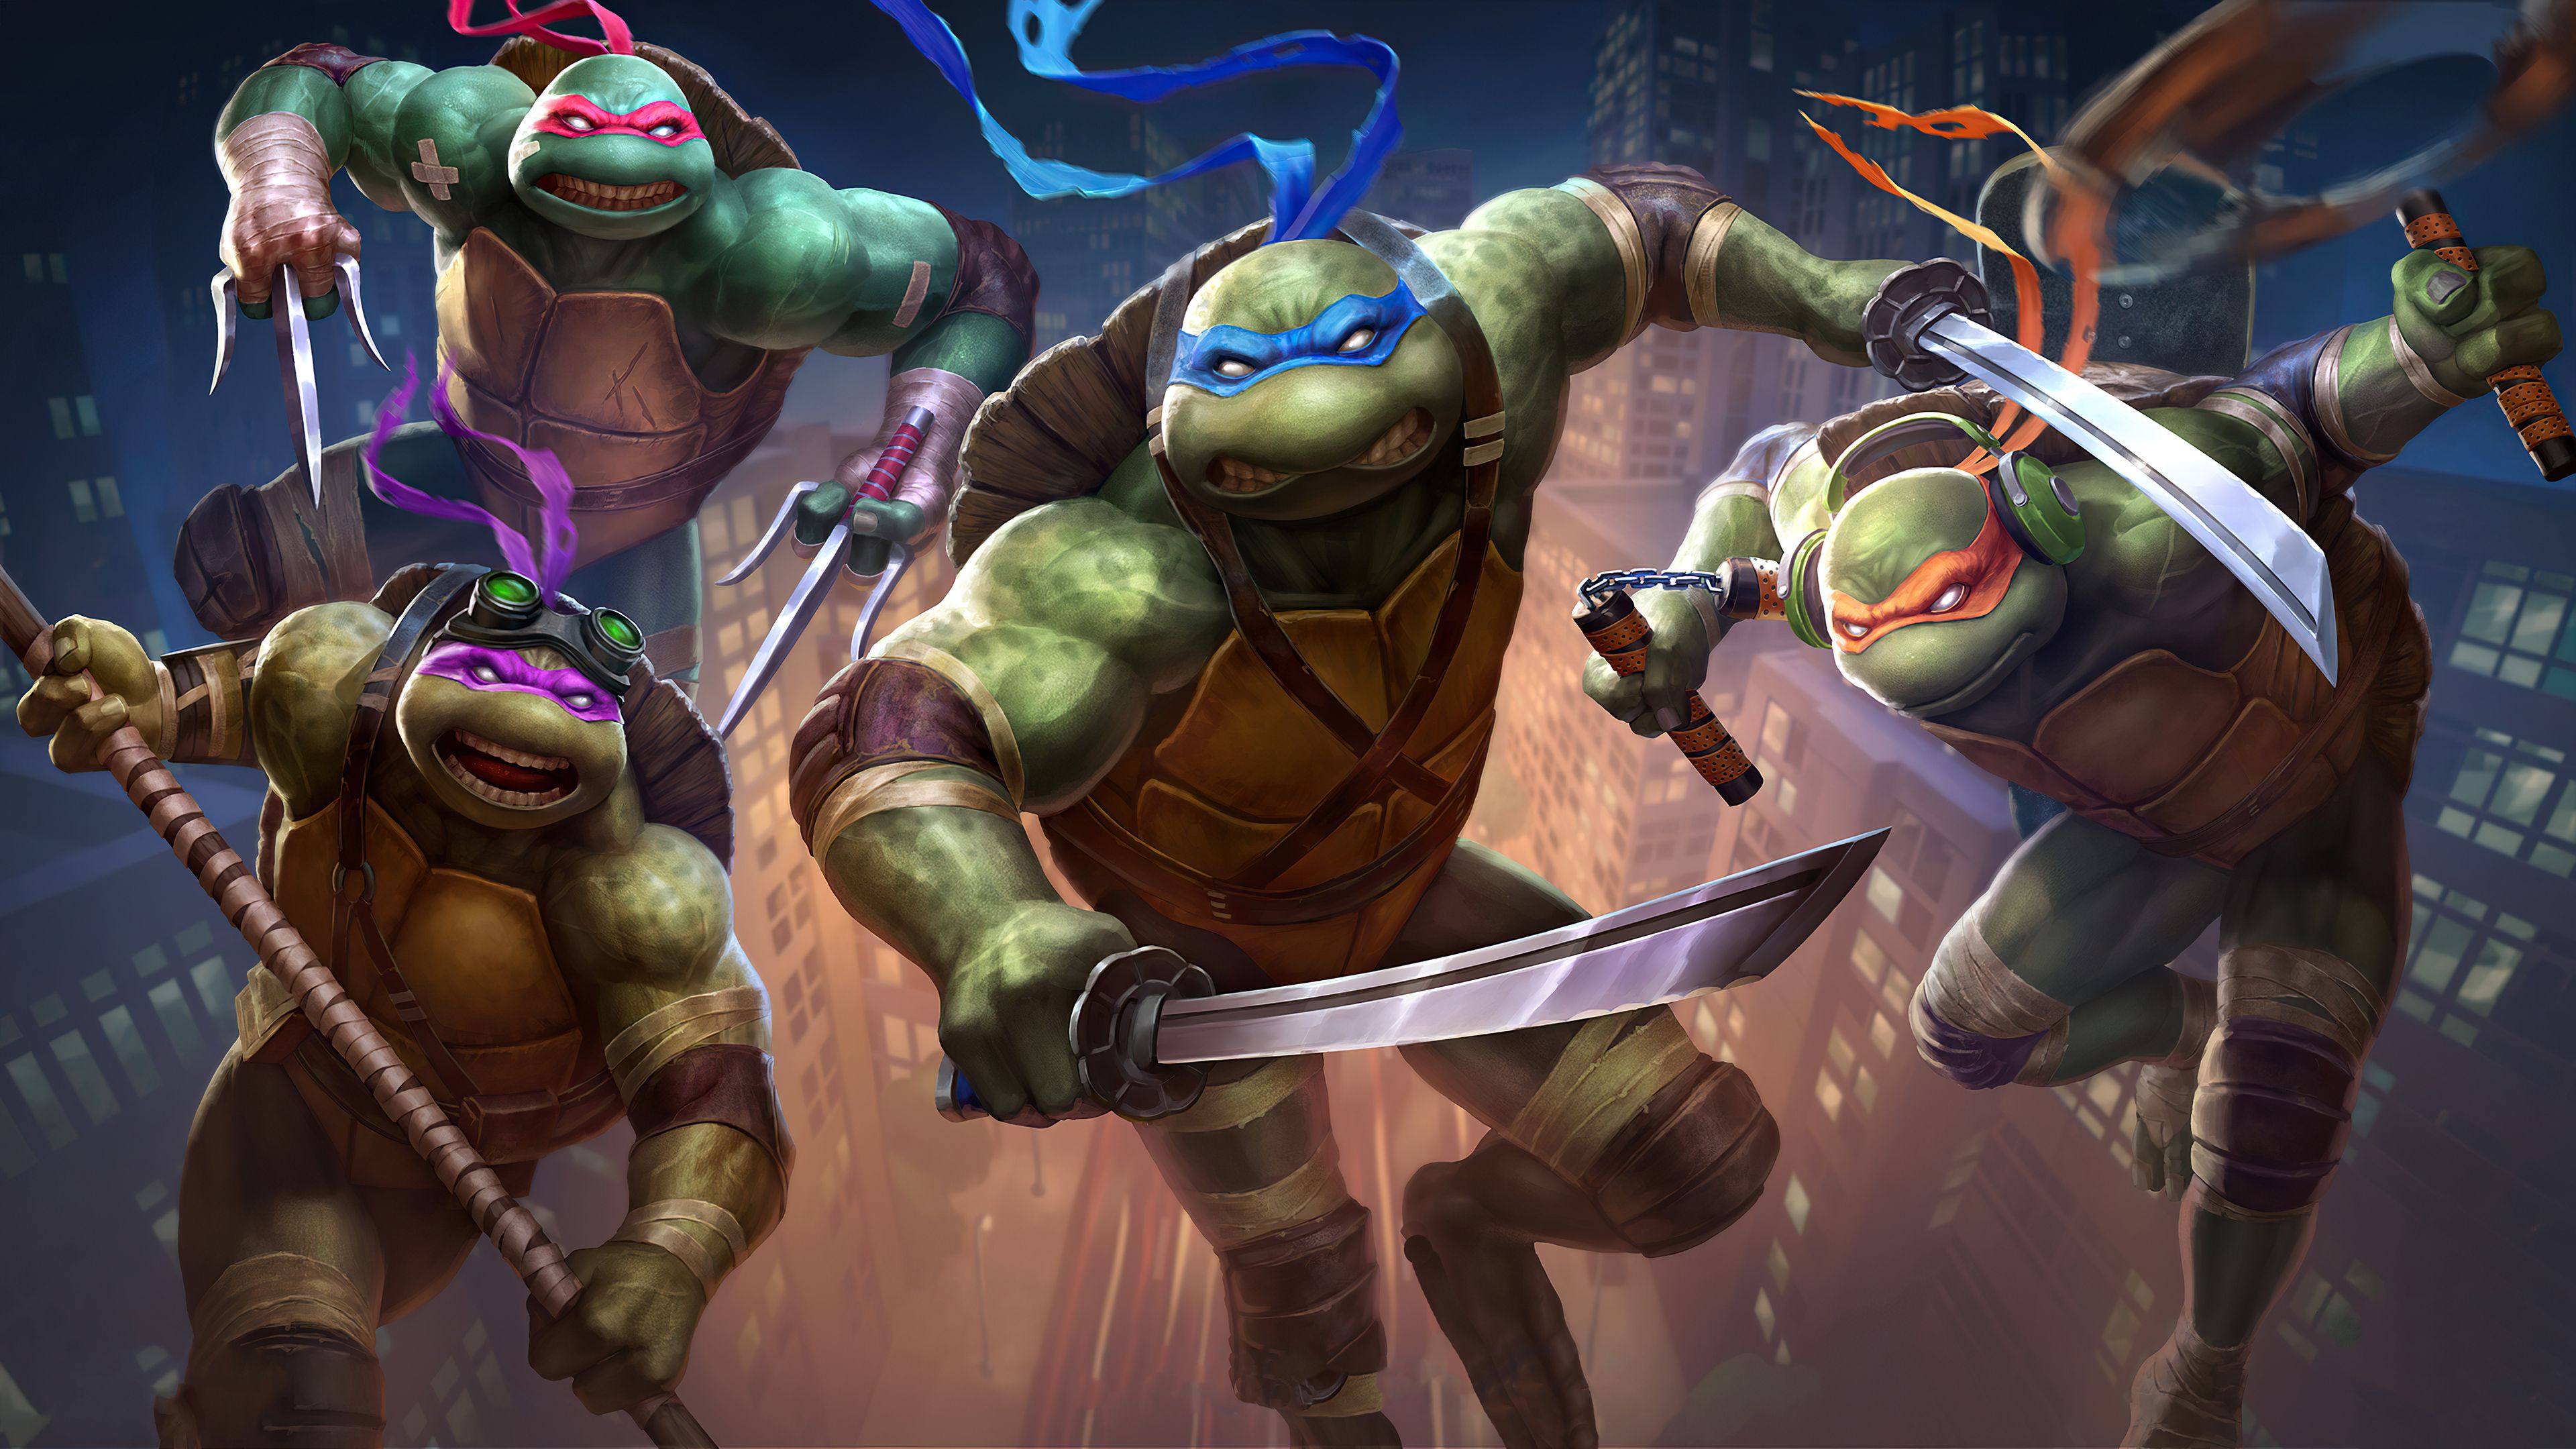 Teenage Mutant Ninja Turtles 2020 1440P Resolution HD 4k Wallpaper, Image, Background, Photo and Picture